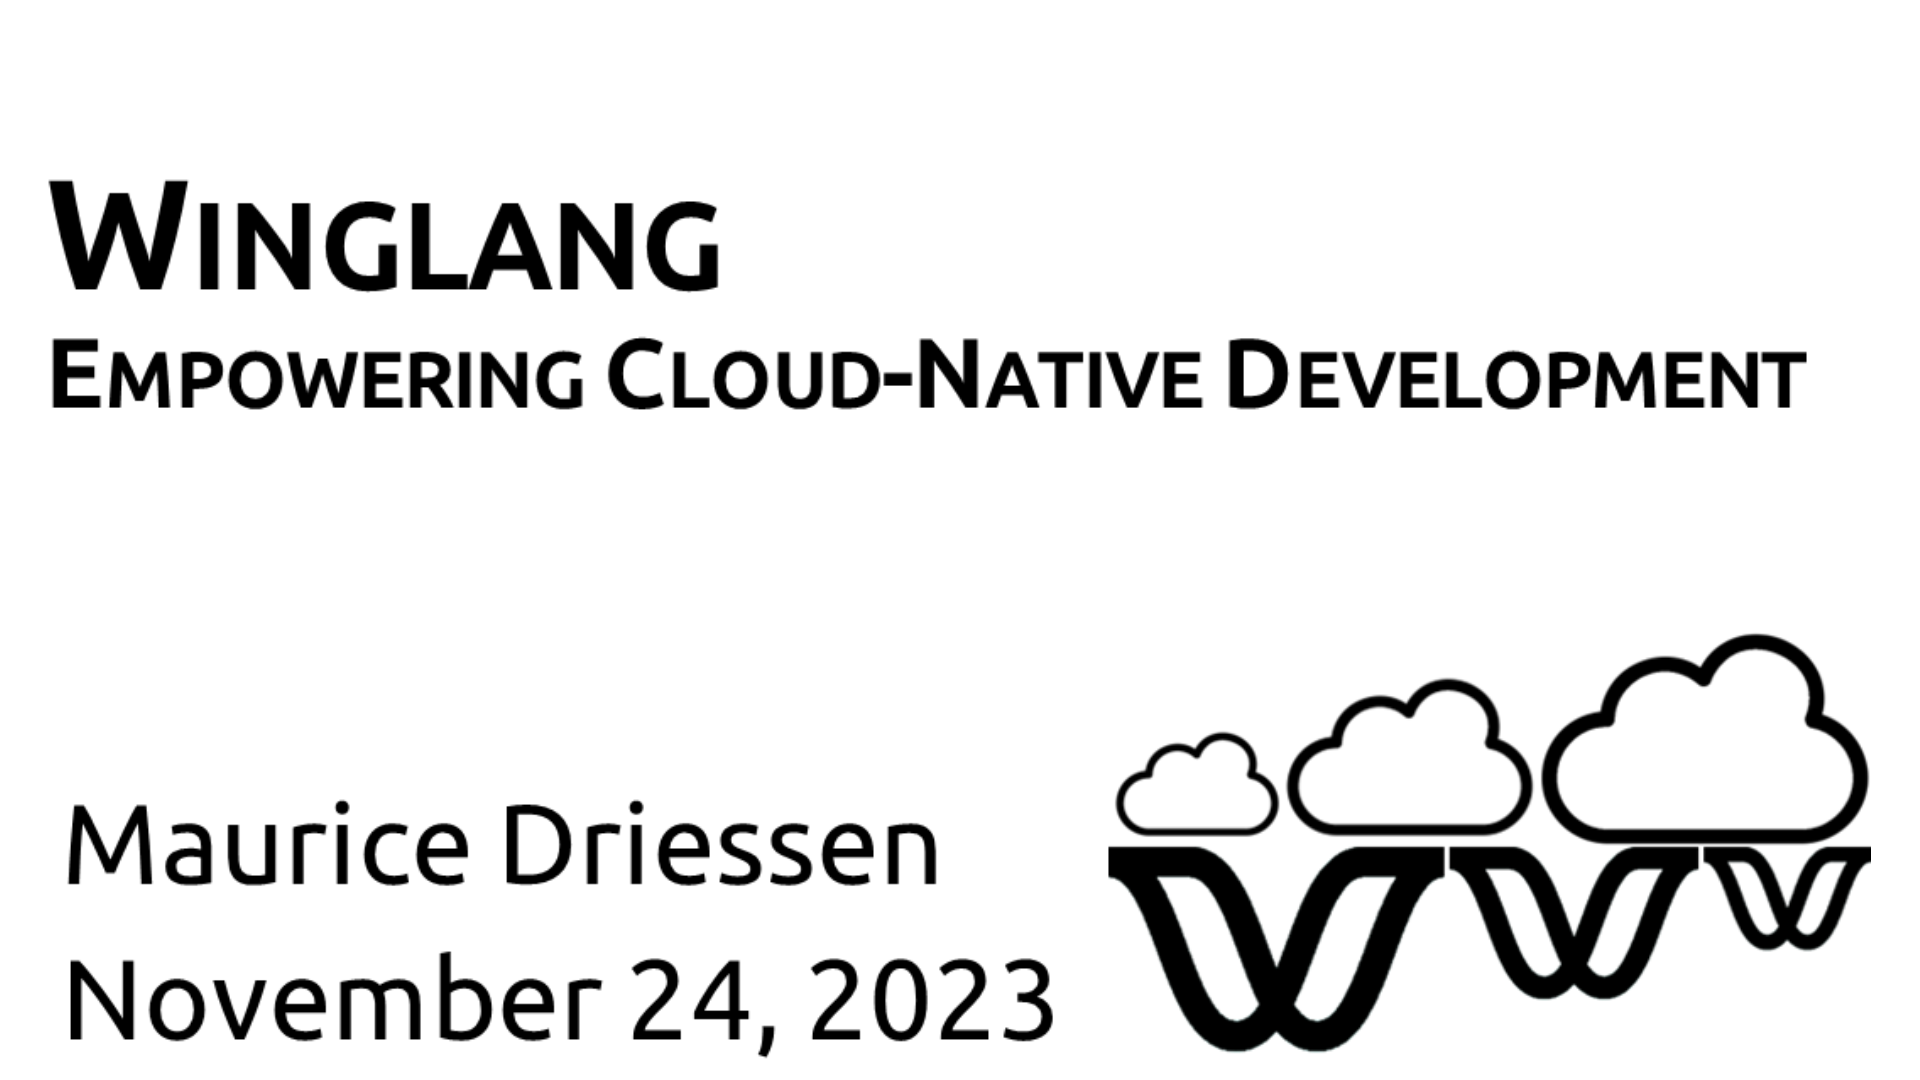 Winglang, Empowering Cloud-Native Development